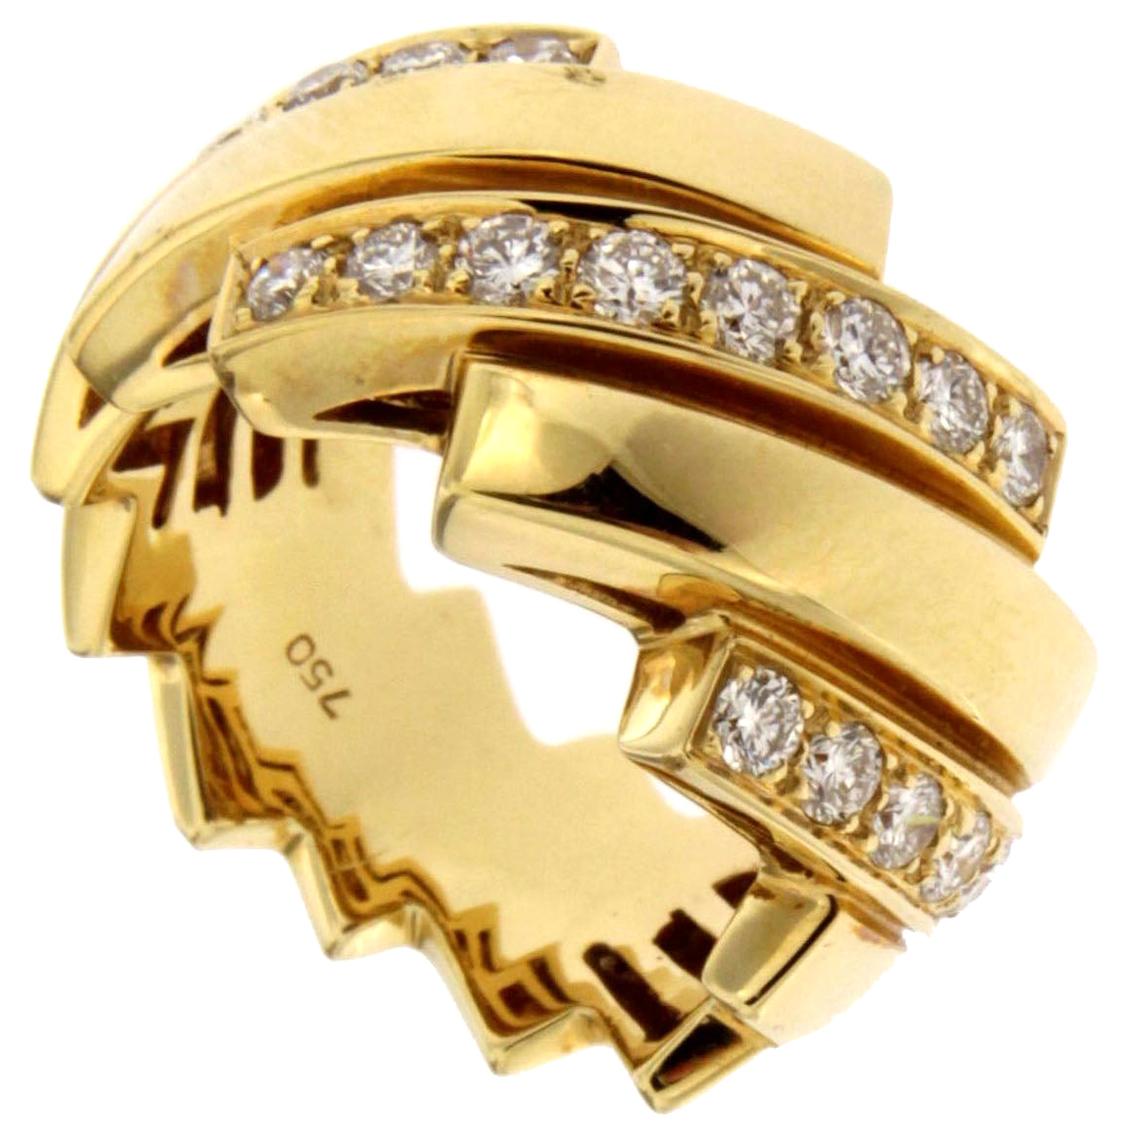 Alex Jona White Diamond 18 Karat Yellow Gold Band Ring